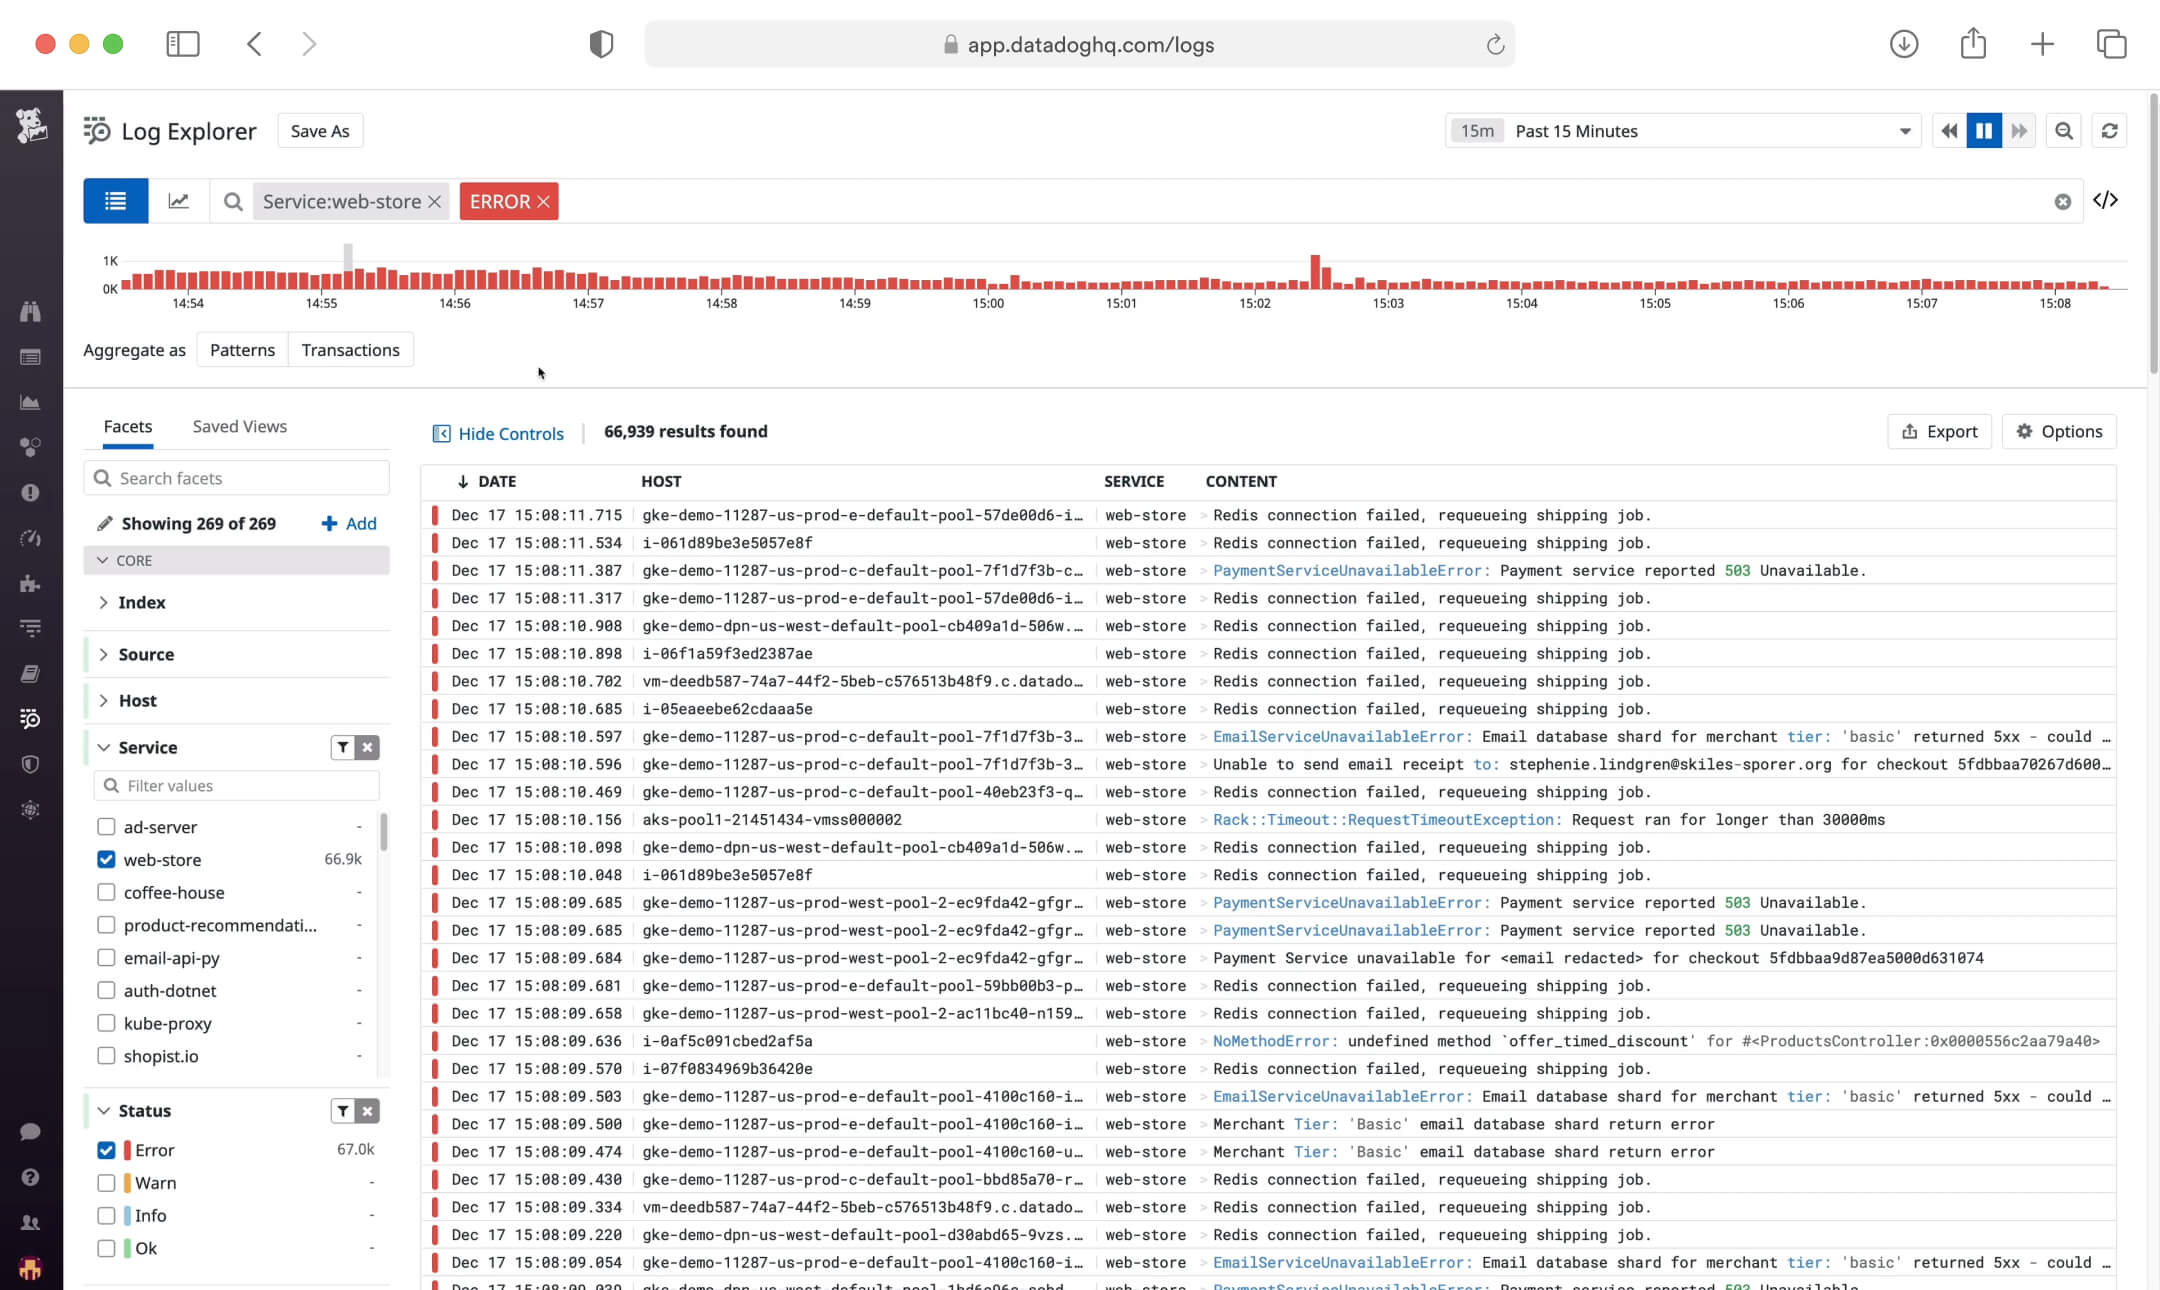 Log explorer dashboard on Datadog displaying the error logs in the web service